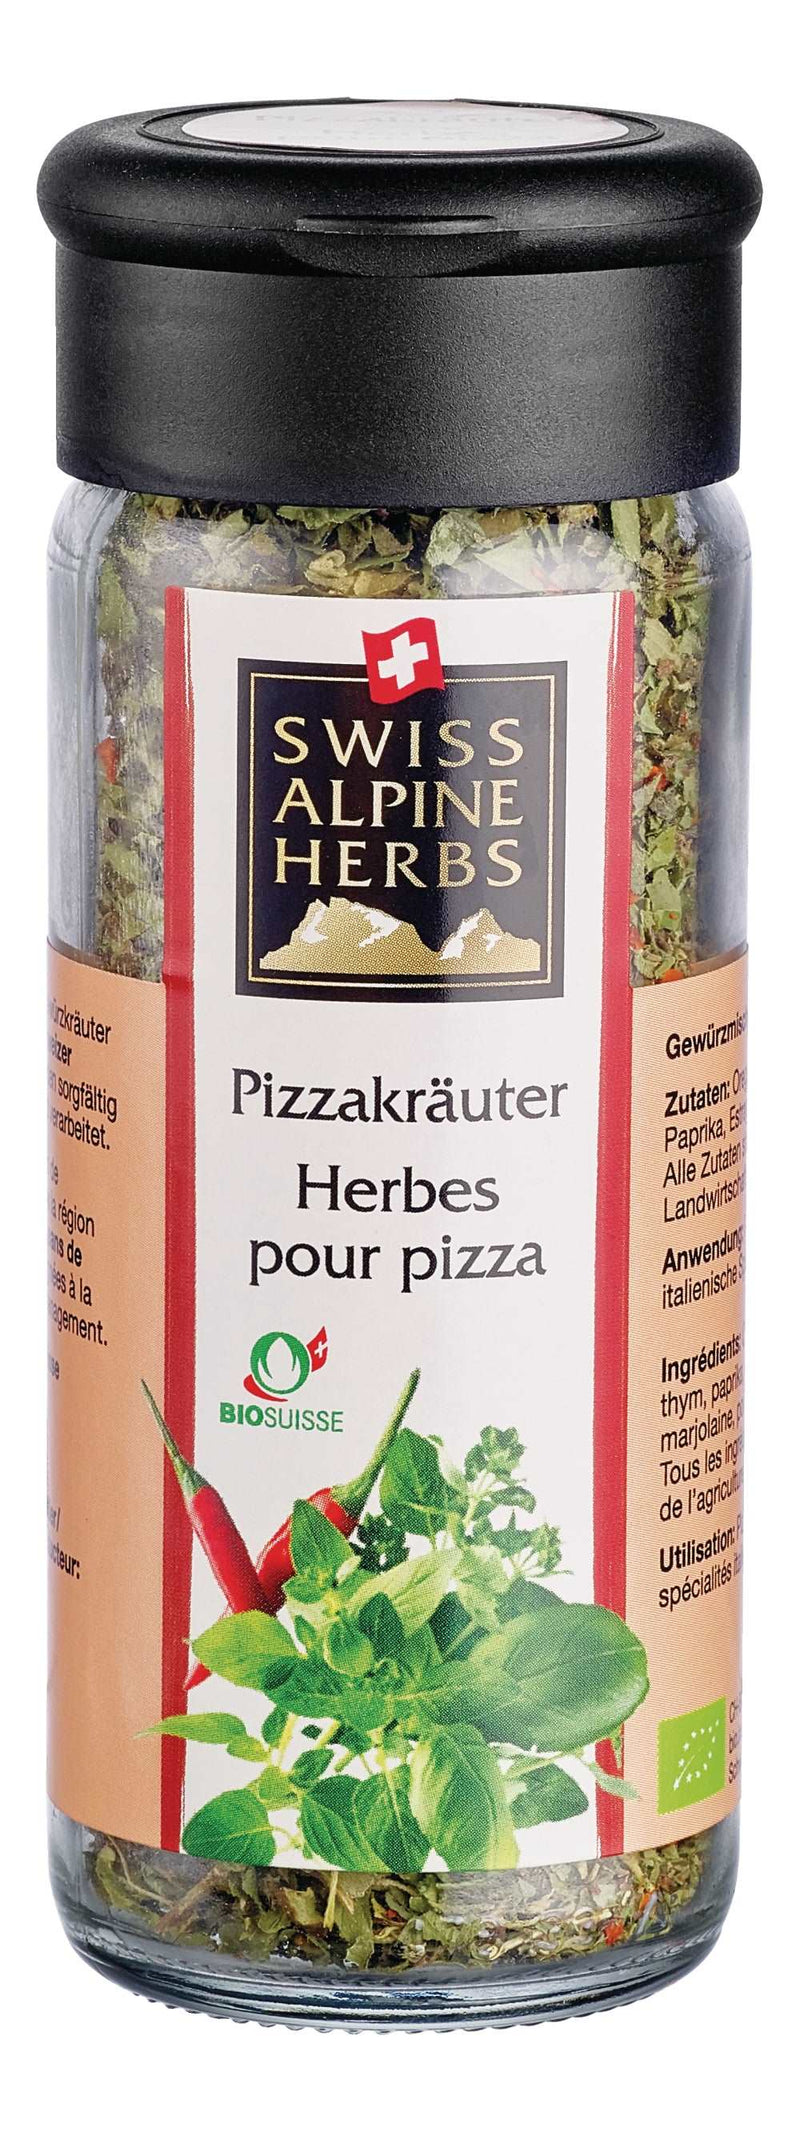 Swiss Alpine Herbs Organic Spice Blend Pizza Herbs, 12g